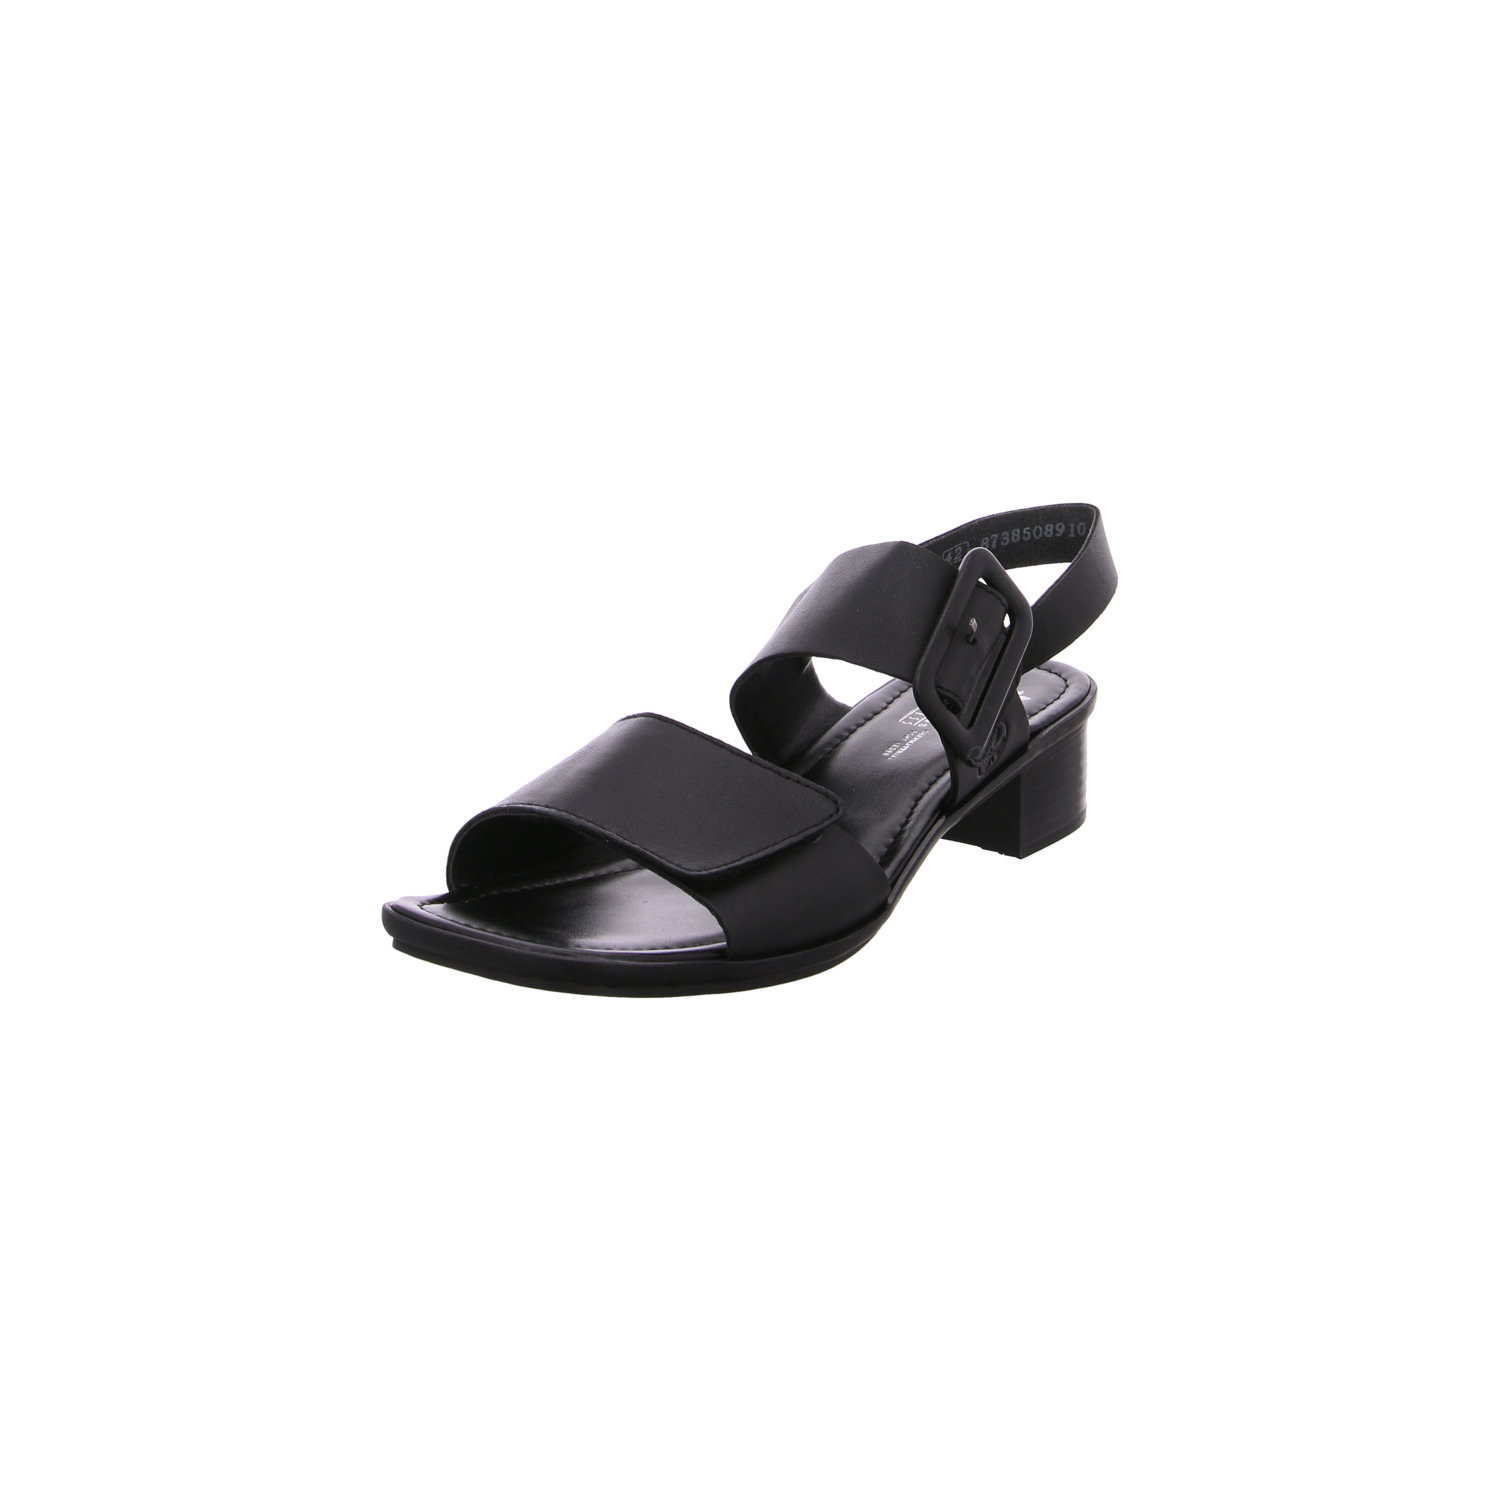 rieker-sandaletten-schwarz-120198-36